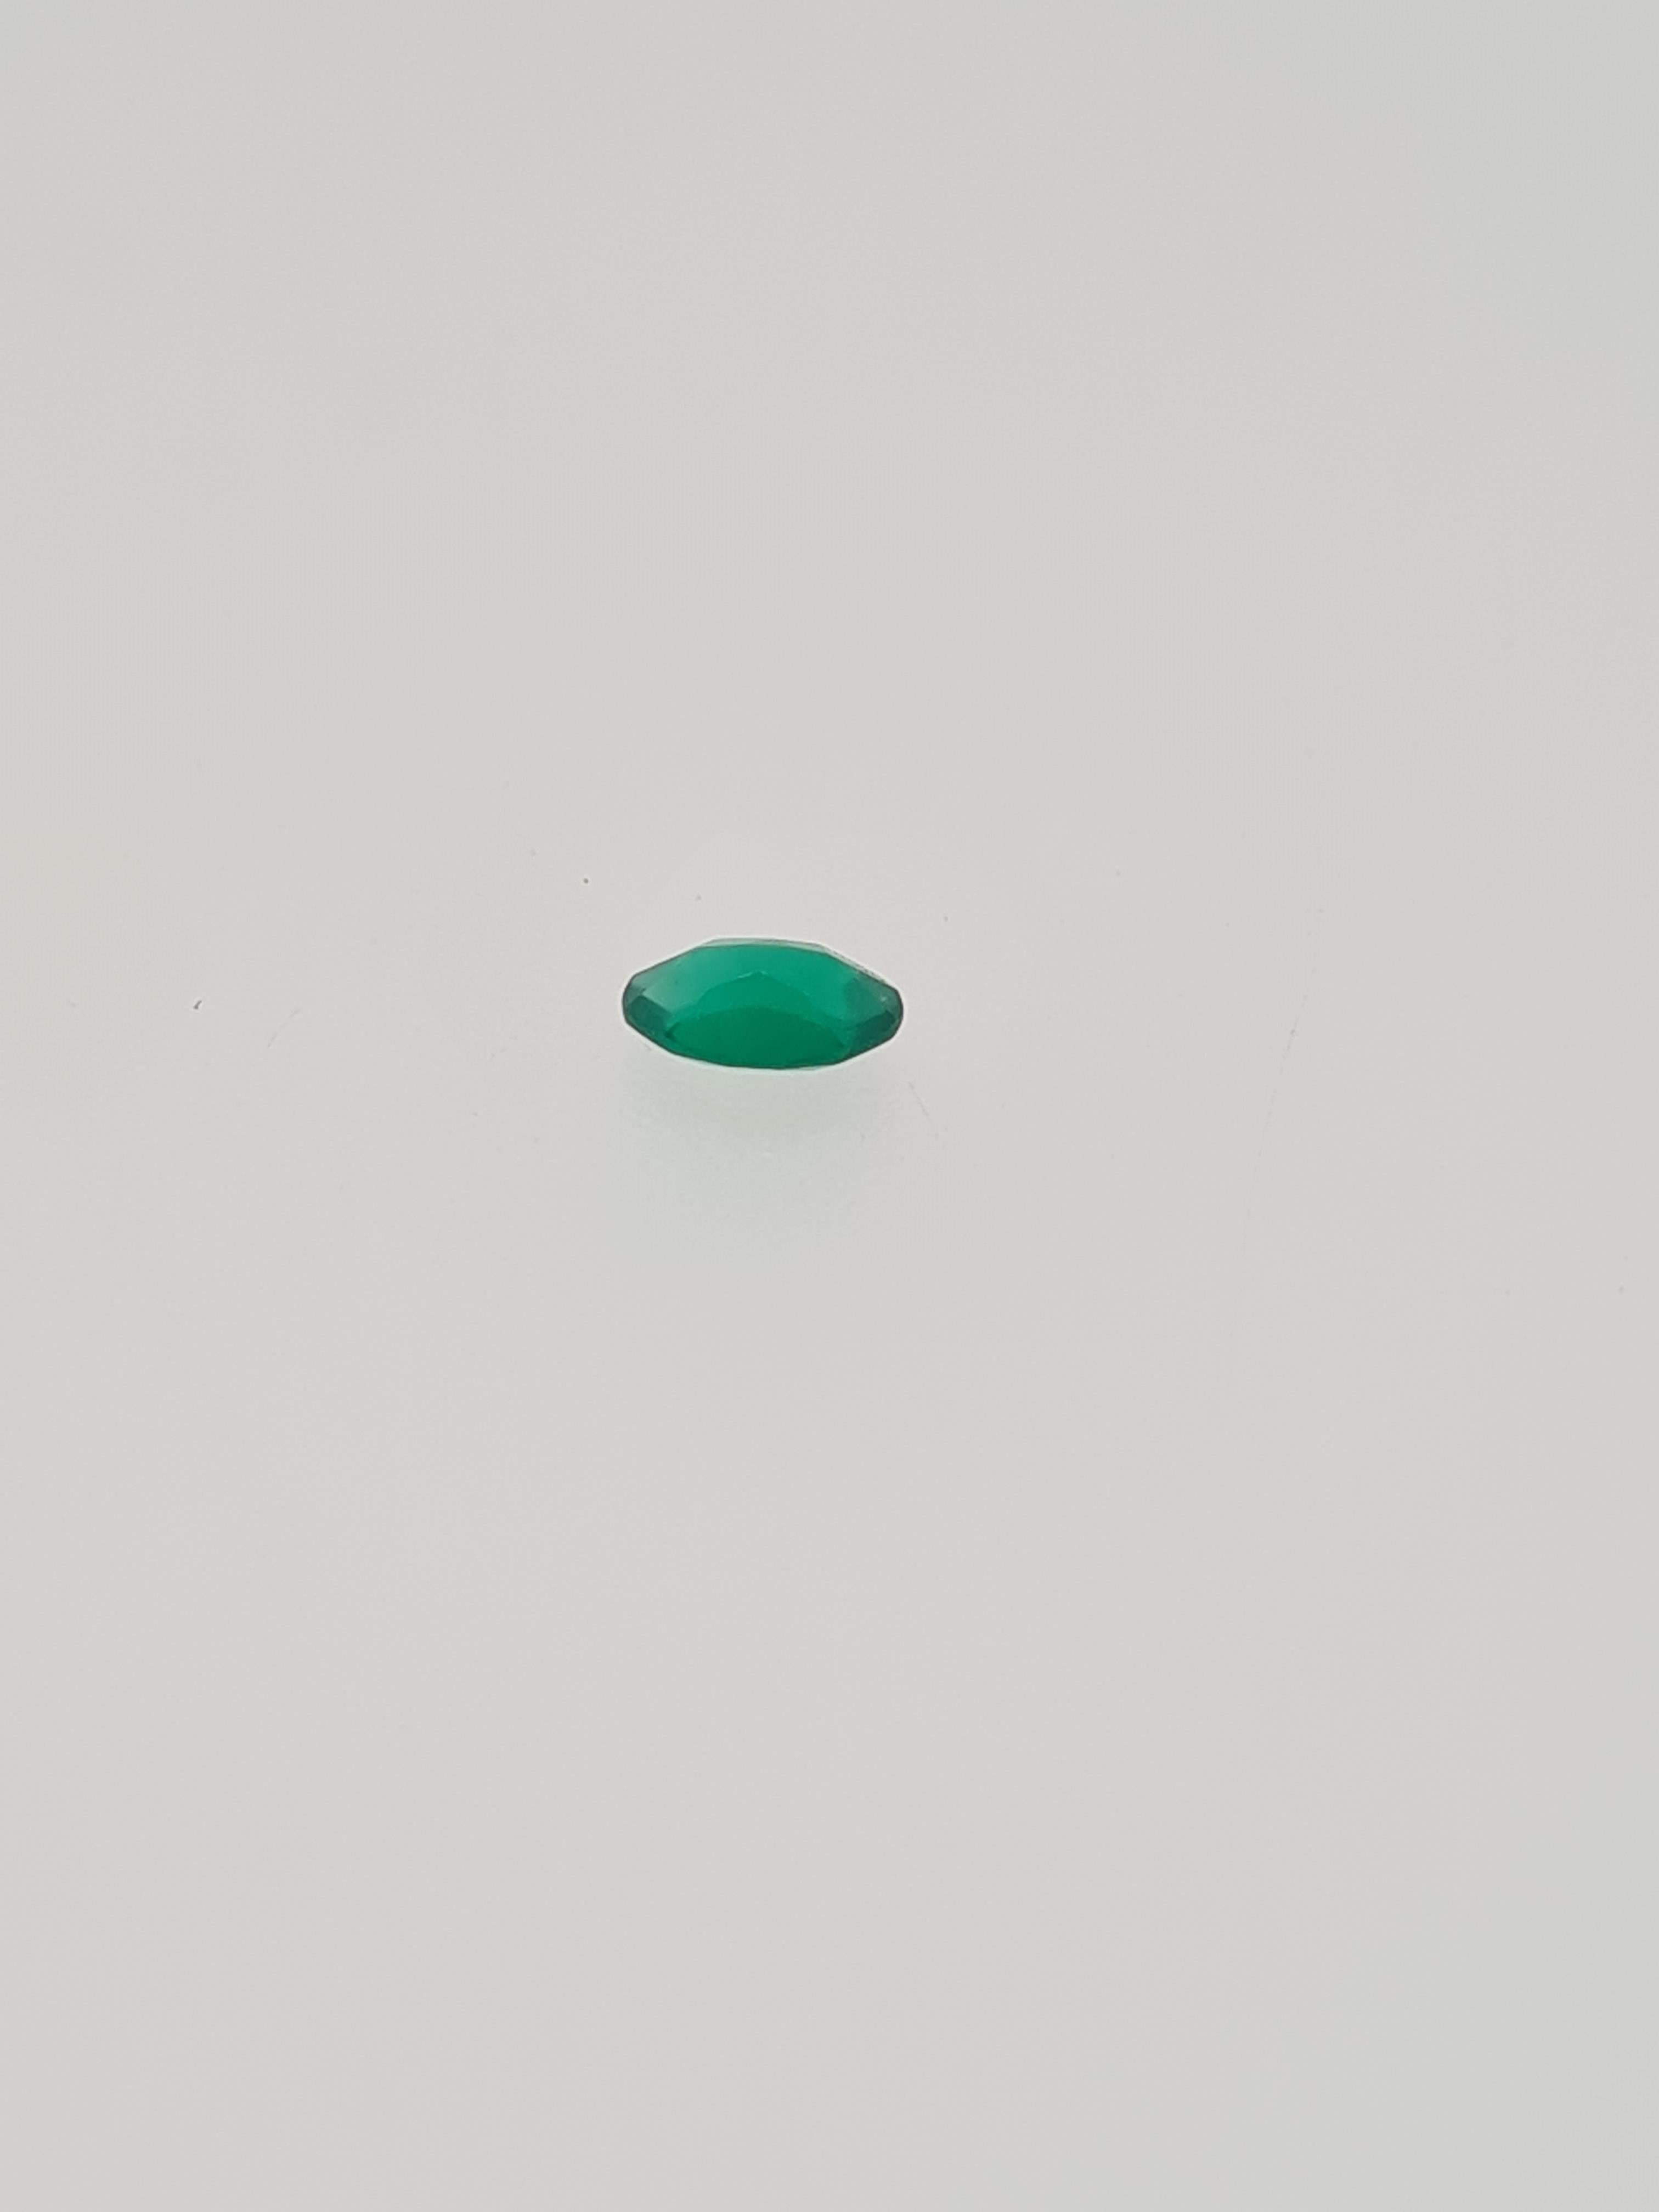 Emerald oval cut gemstone - Image 2 of 4